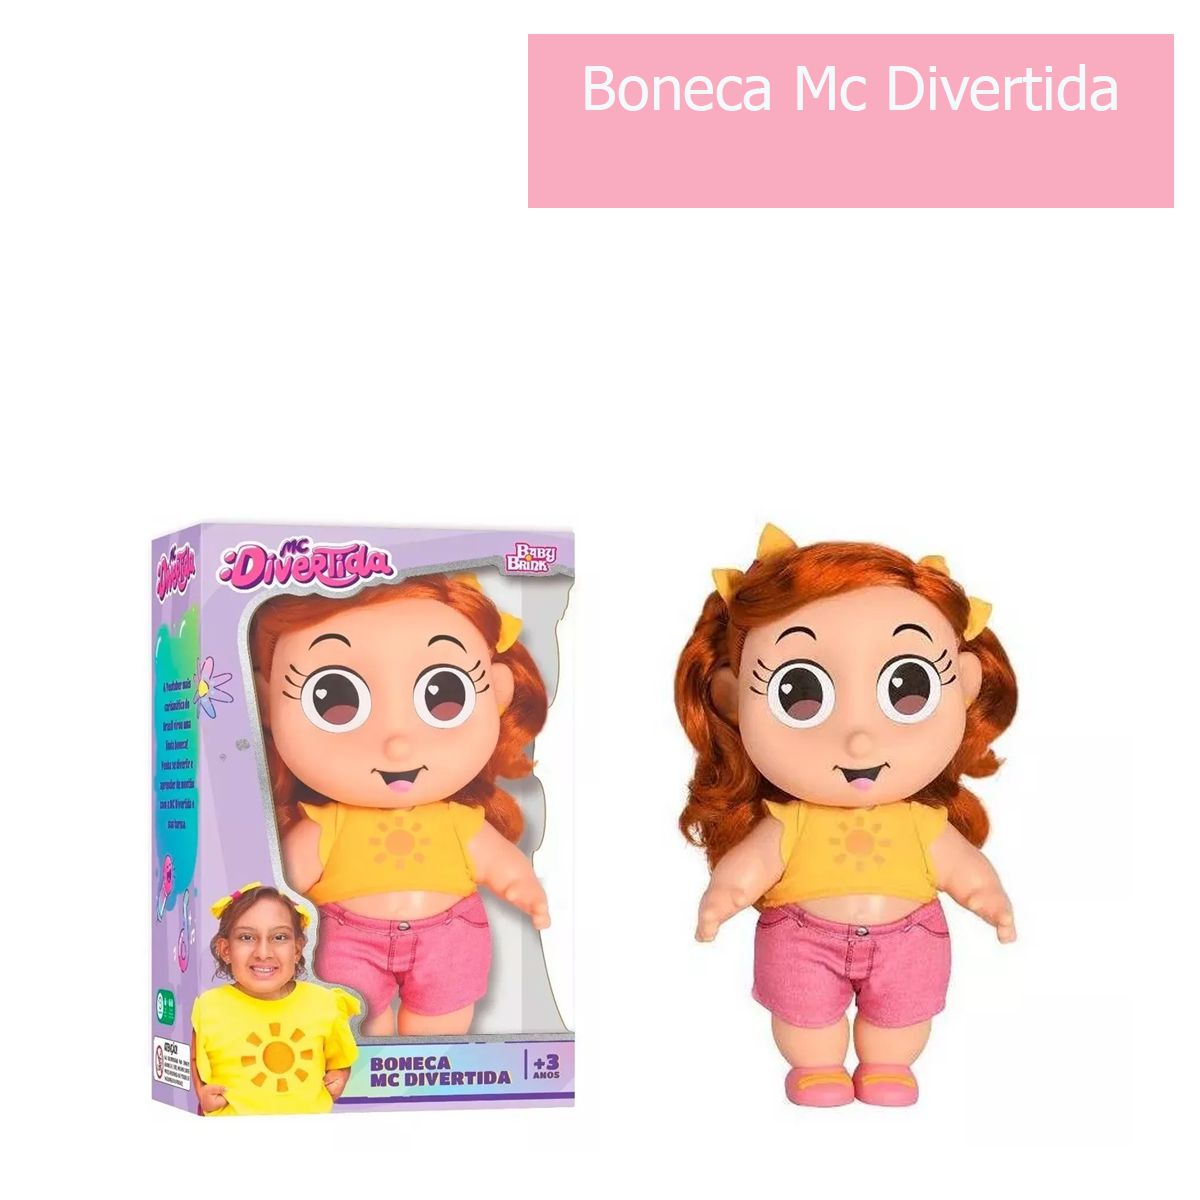 Mc Divertida Boneca Maria Clara r Infantil Original